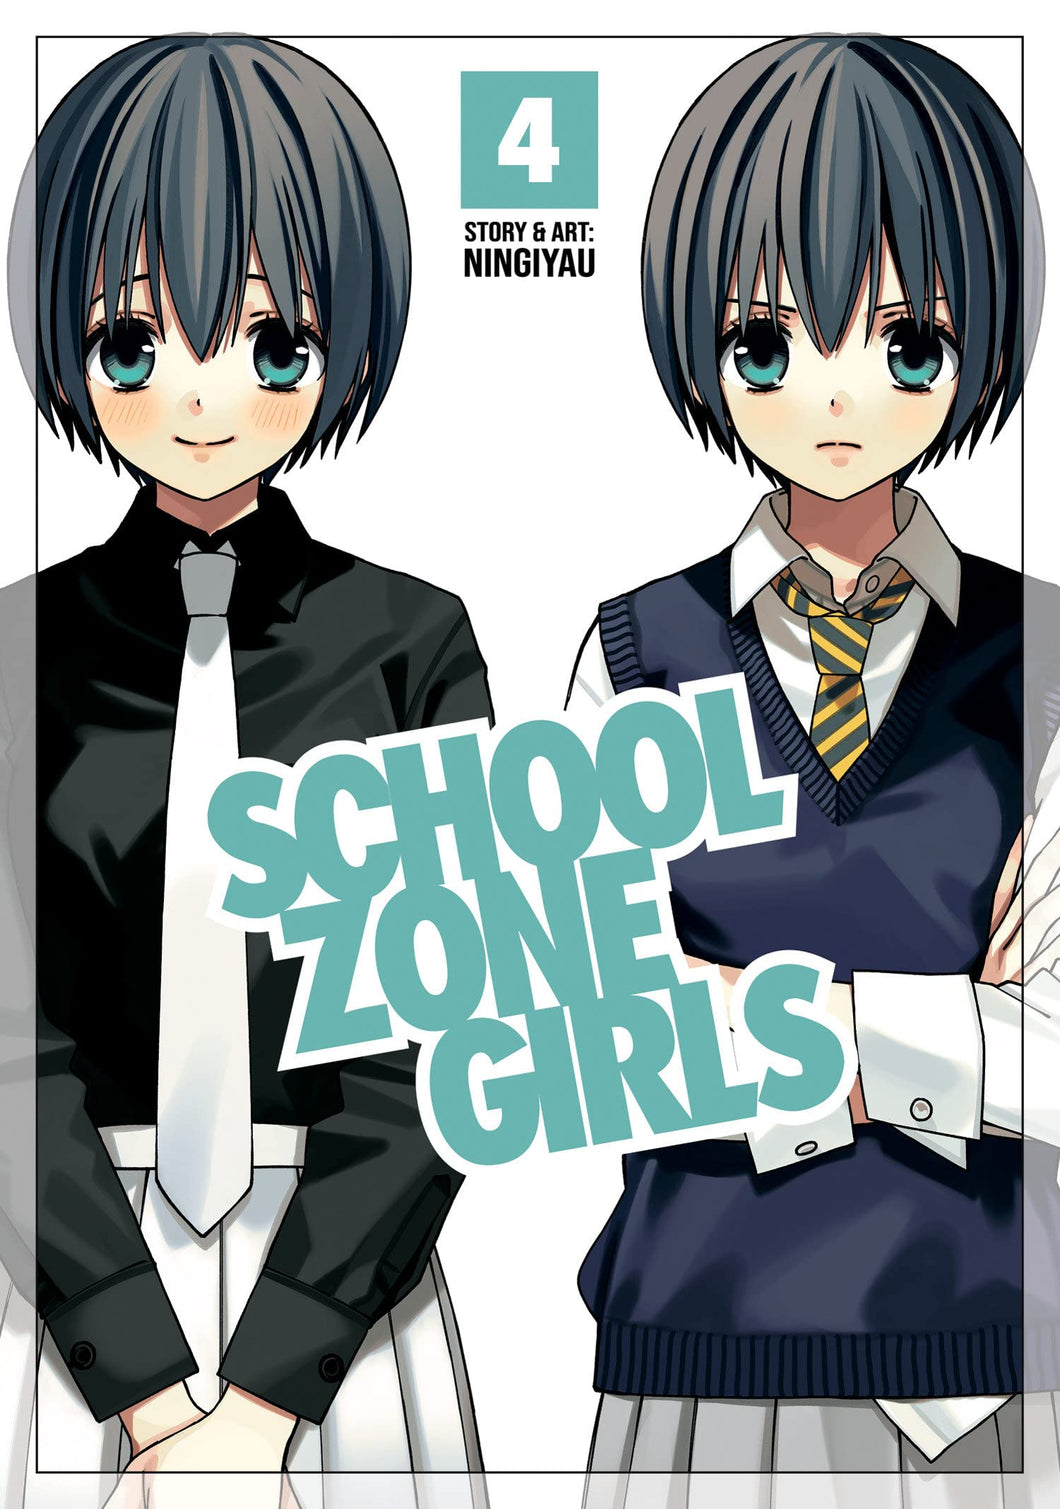 School Zone Girls Volume 4